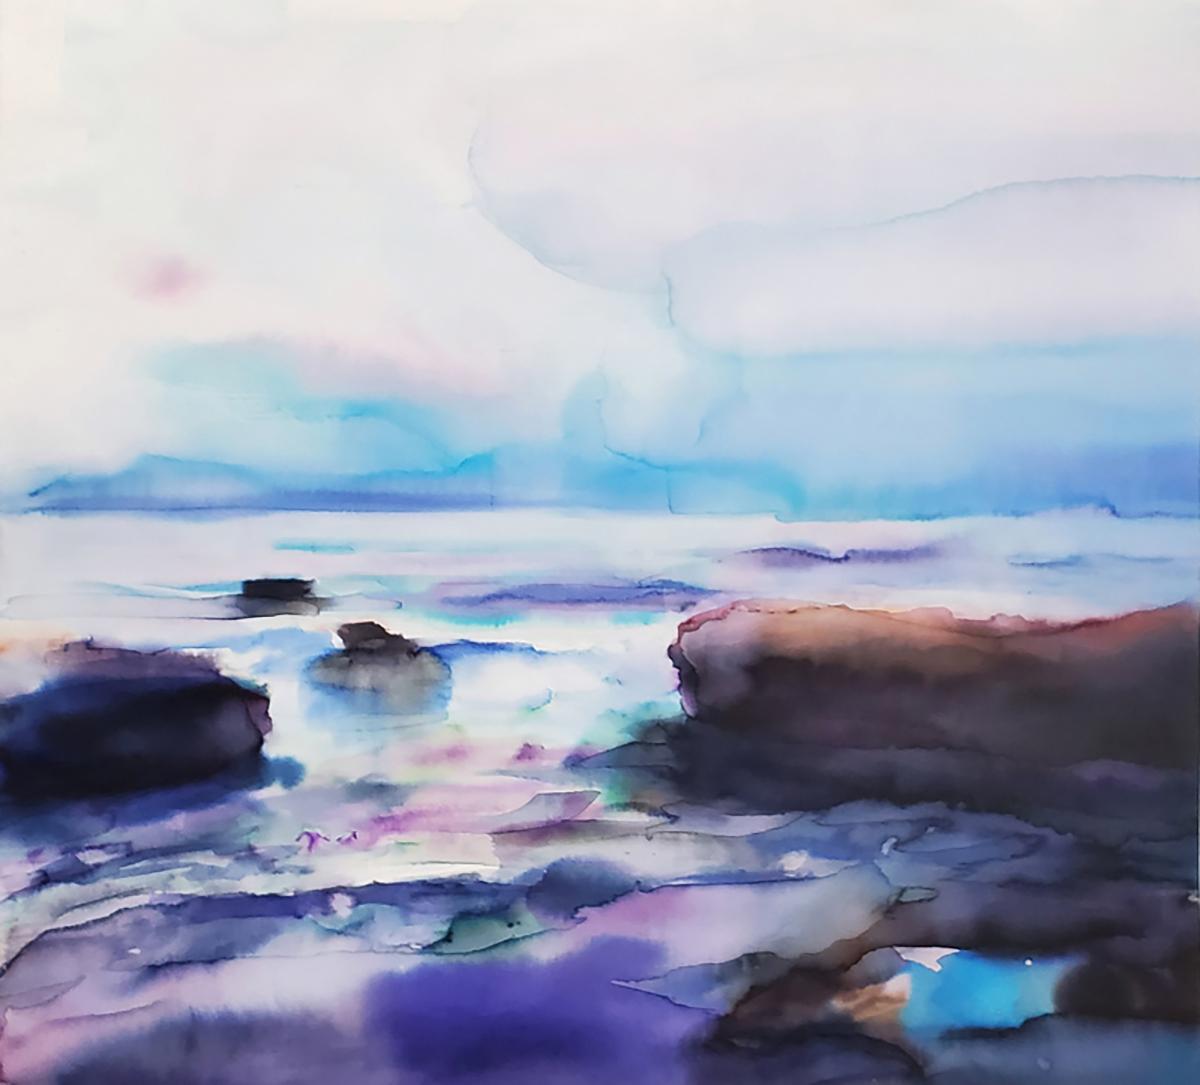  Elena Chestnykh Landscape Art - "Eternal Ocean" Watercolor on Paper, Landscape, Ocean, Framed